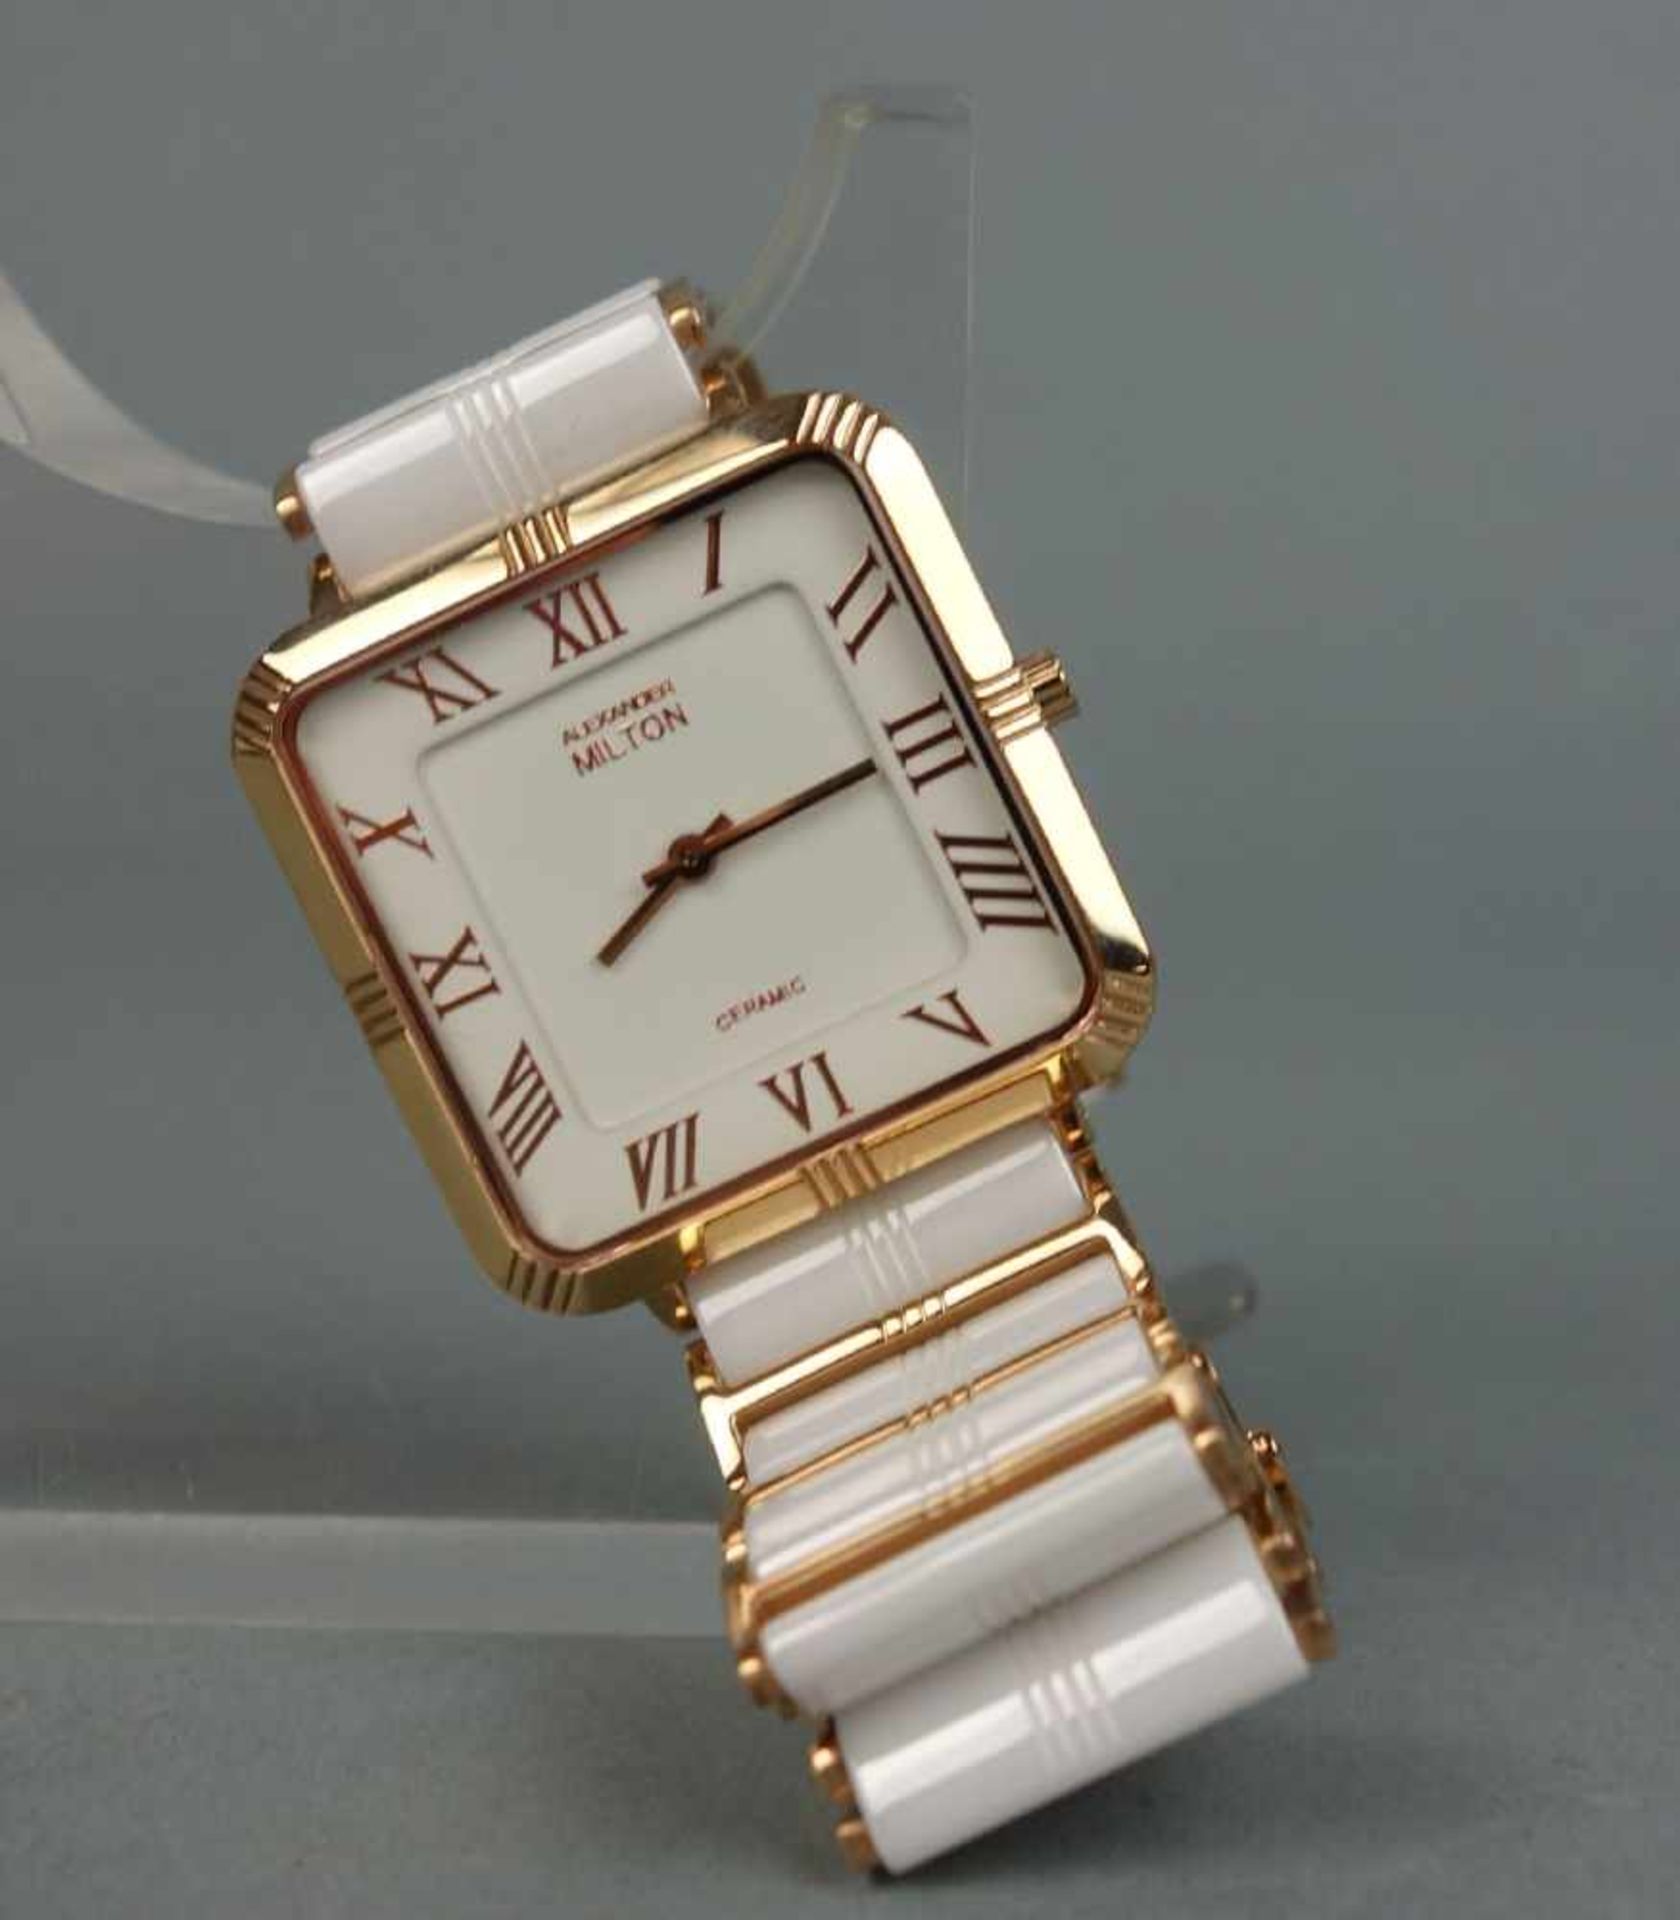 KERAMIK-ARMBANDUHR - ALEXANDER MILTON / wristwatch, Quarz-Uhr, Manufaktur Alexander Milton /